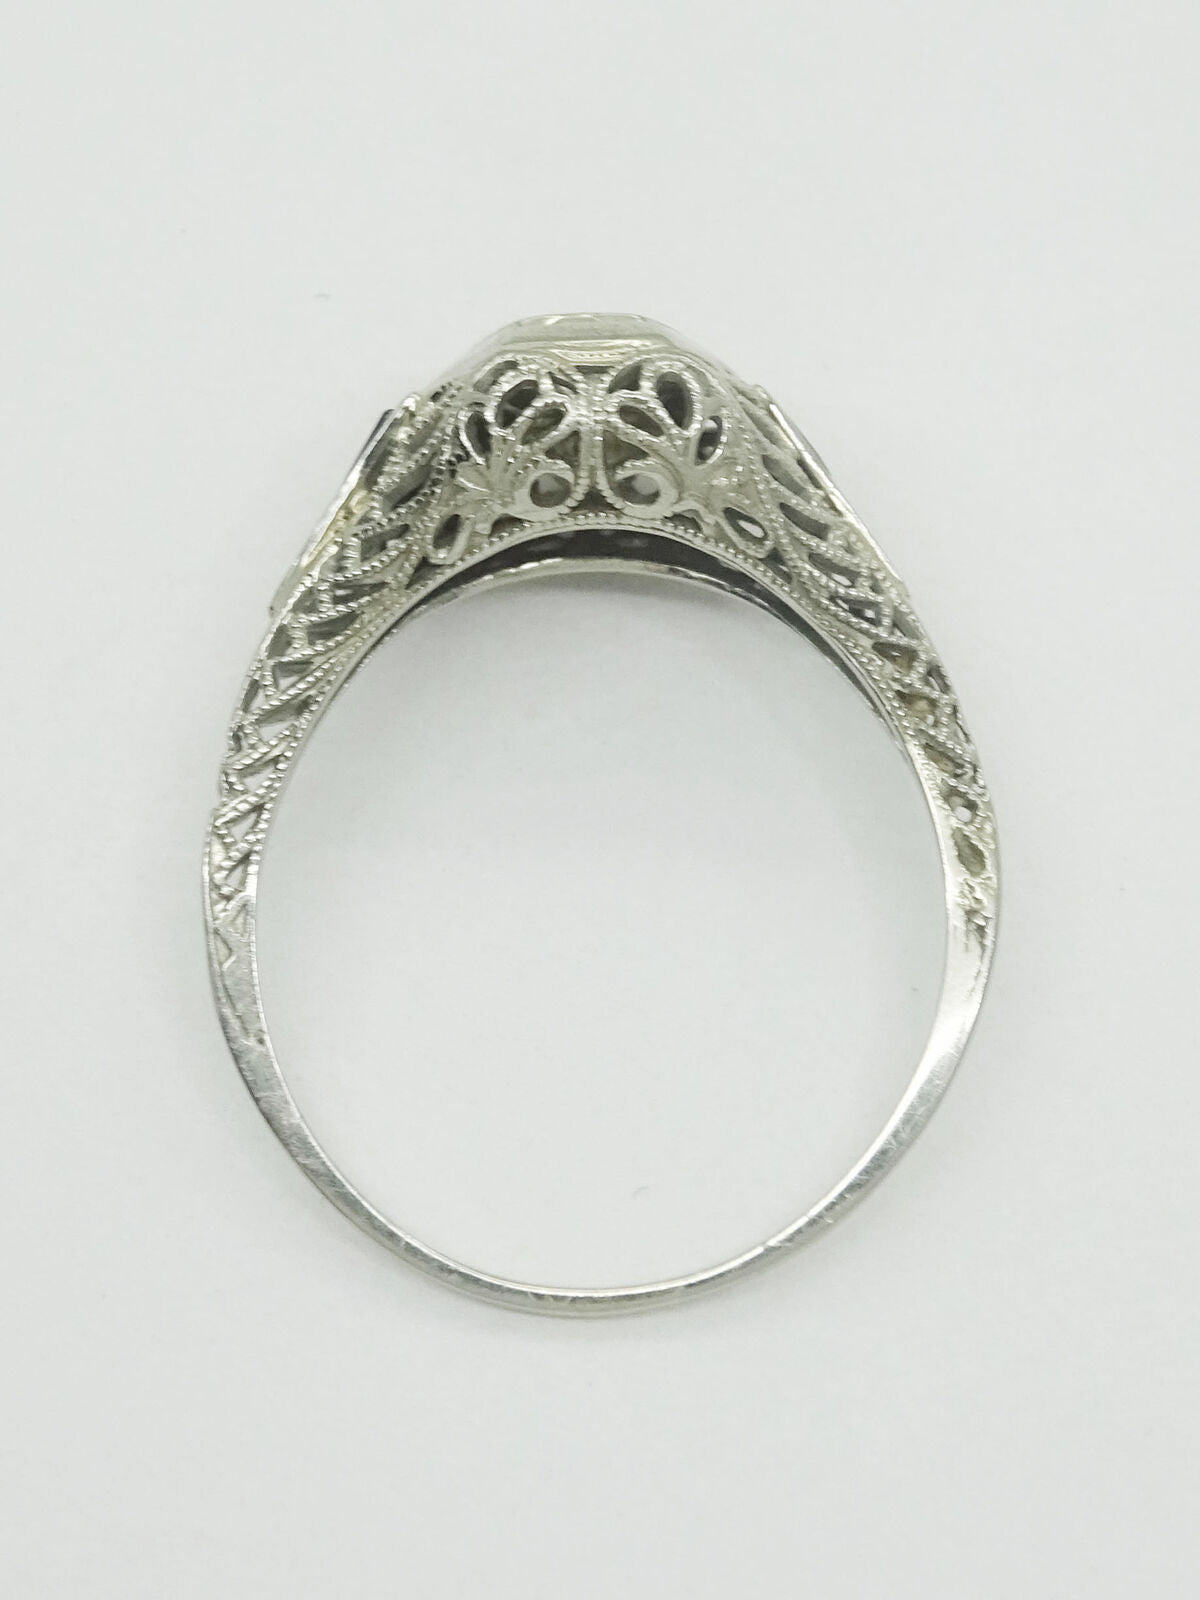 Edwardian Platinum Diamond & Sapphire Filigree Ring Size 7.5